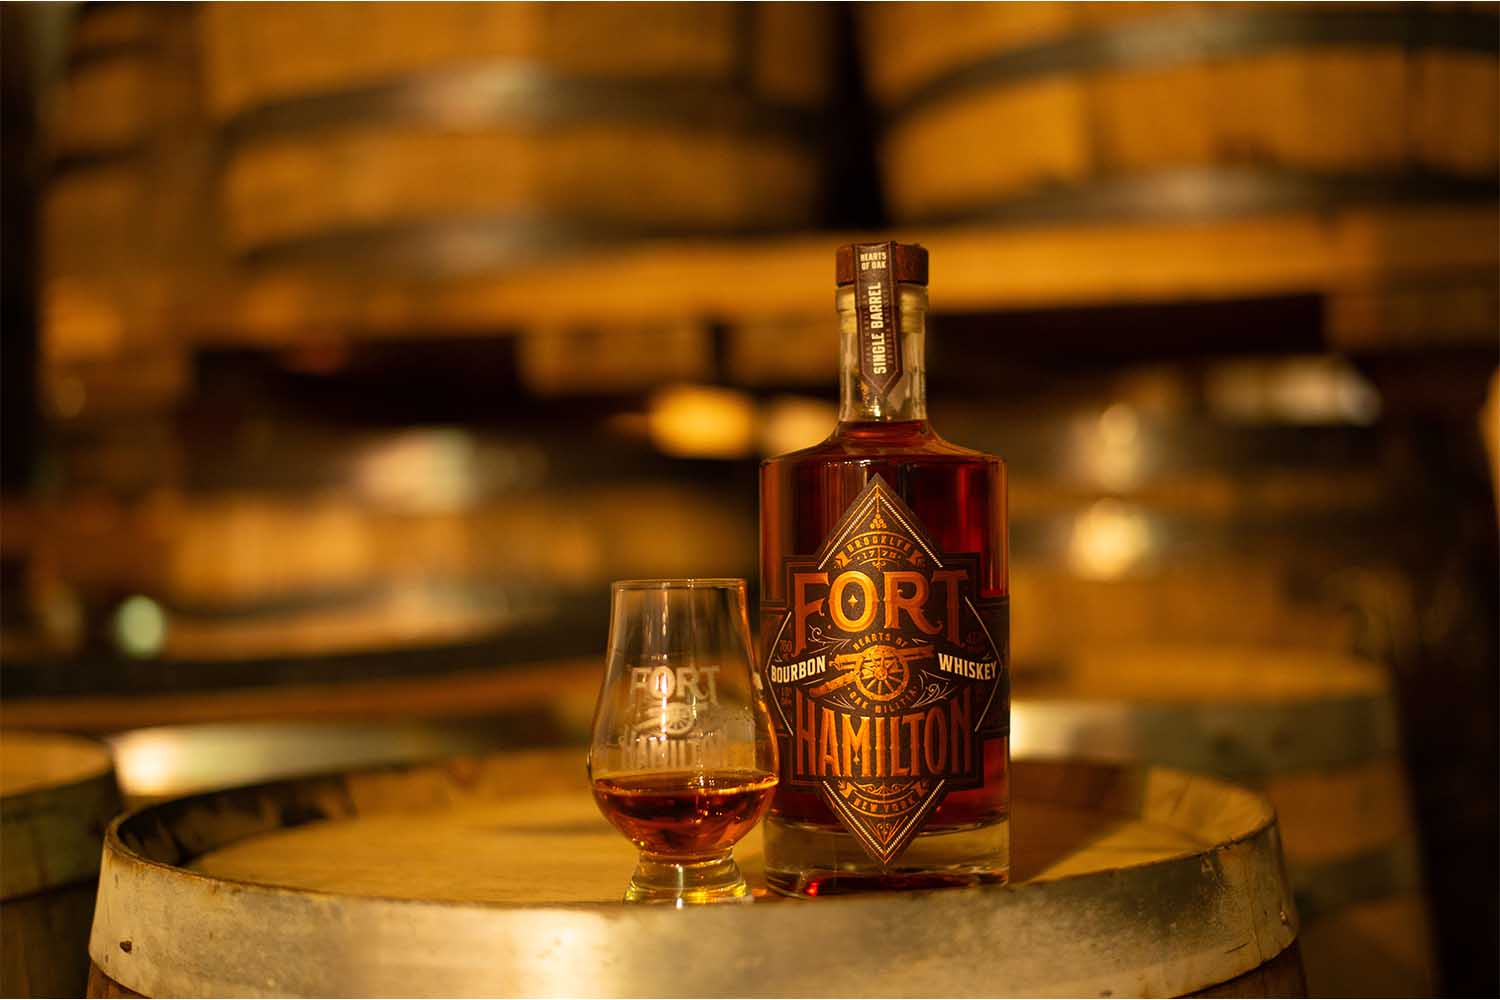 Fort Hamilton Single Barrel Bourbon